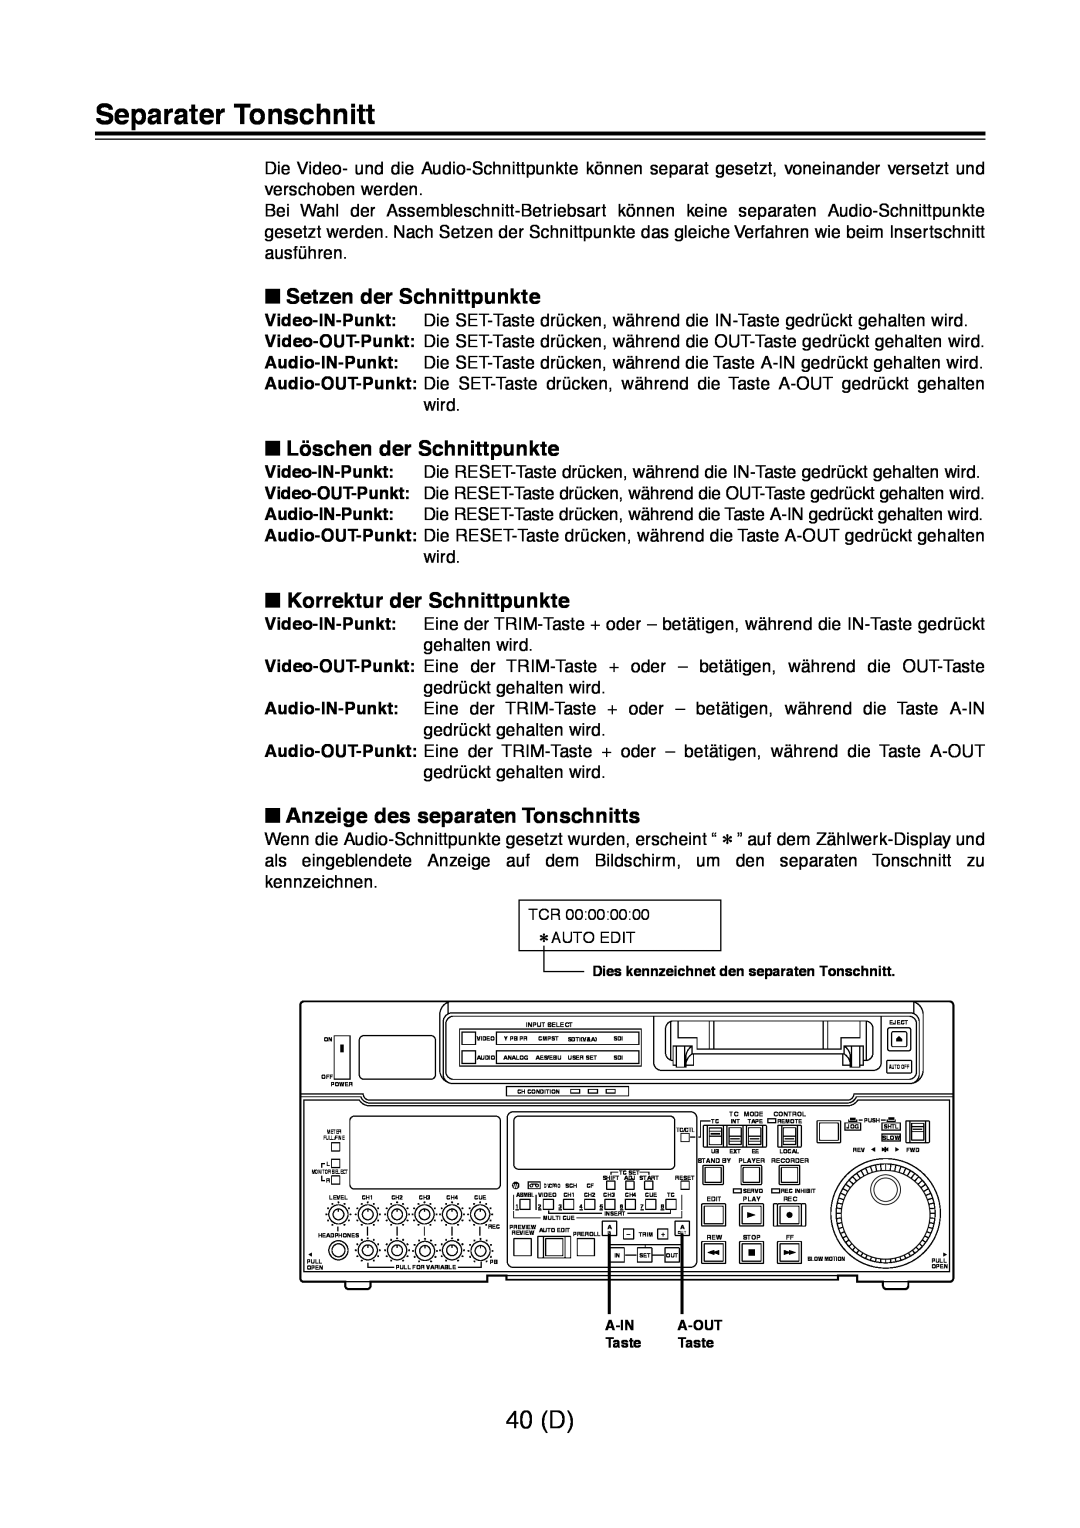 Panasonic AJ-D960 operating instructions Separater Tonschnitt, 40 D, Setzen der Schnittpunkte, Löschen der Schnittpunkte 